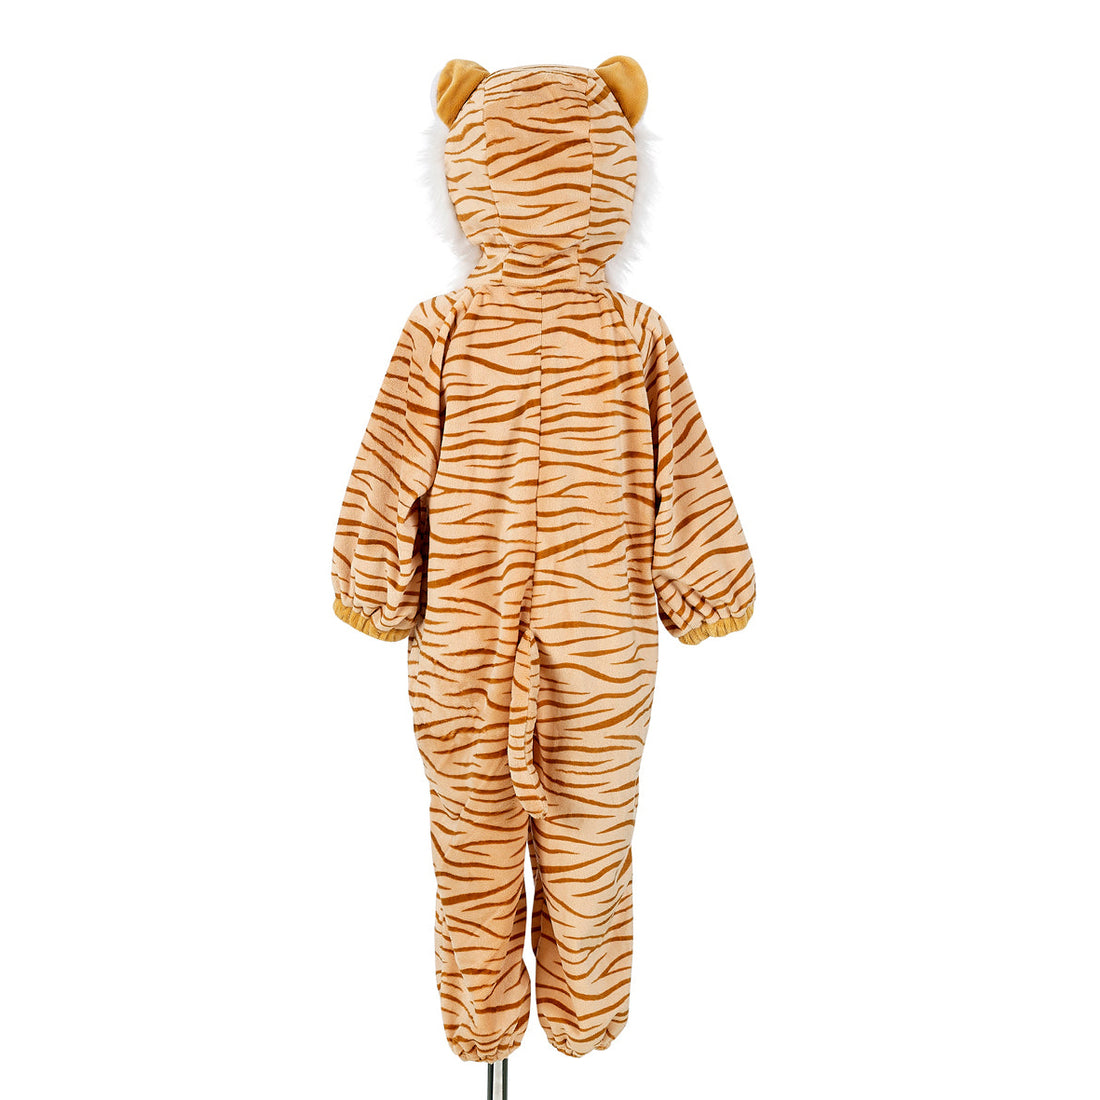 Souza !: Kigurumi Costume Tiger Timmy